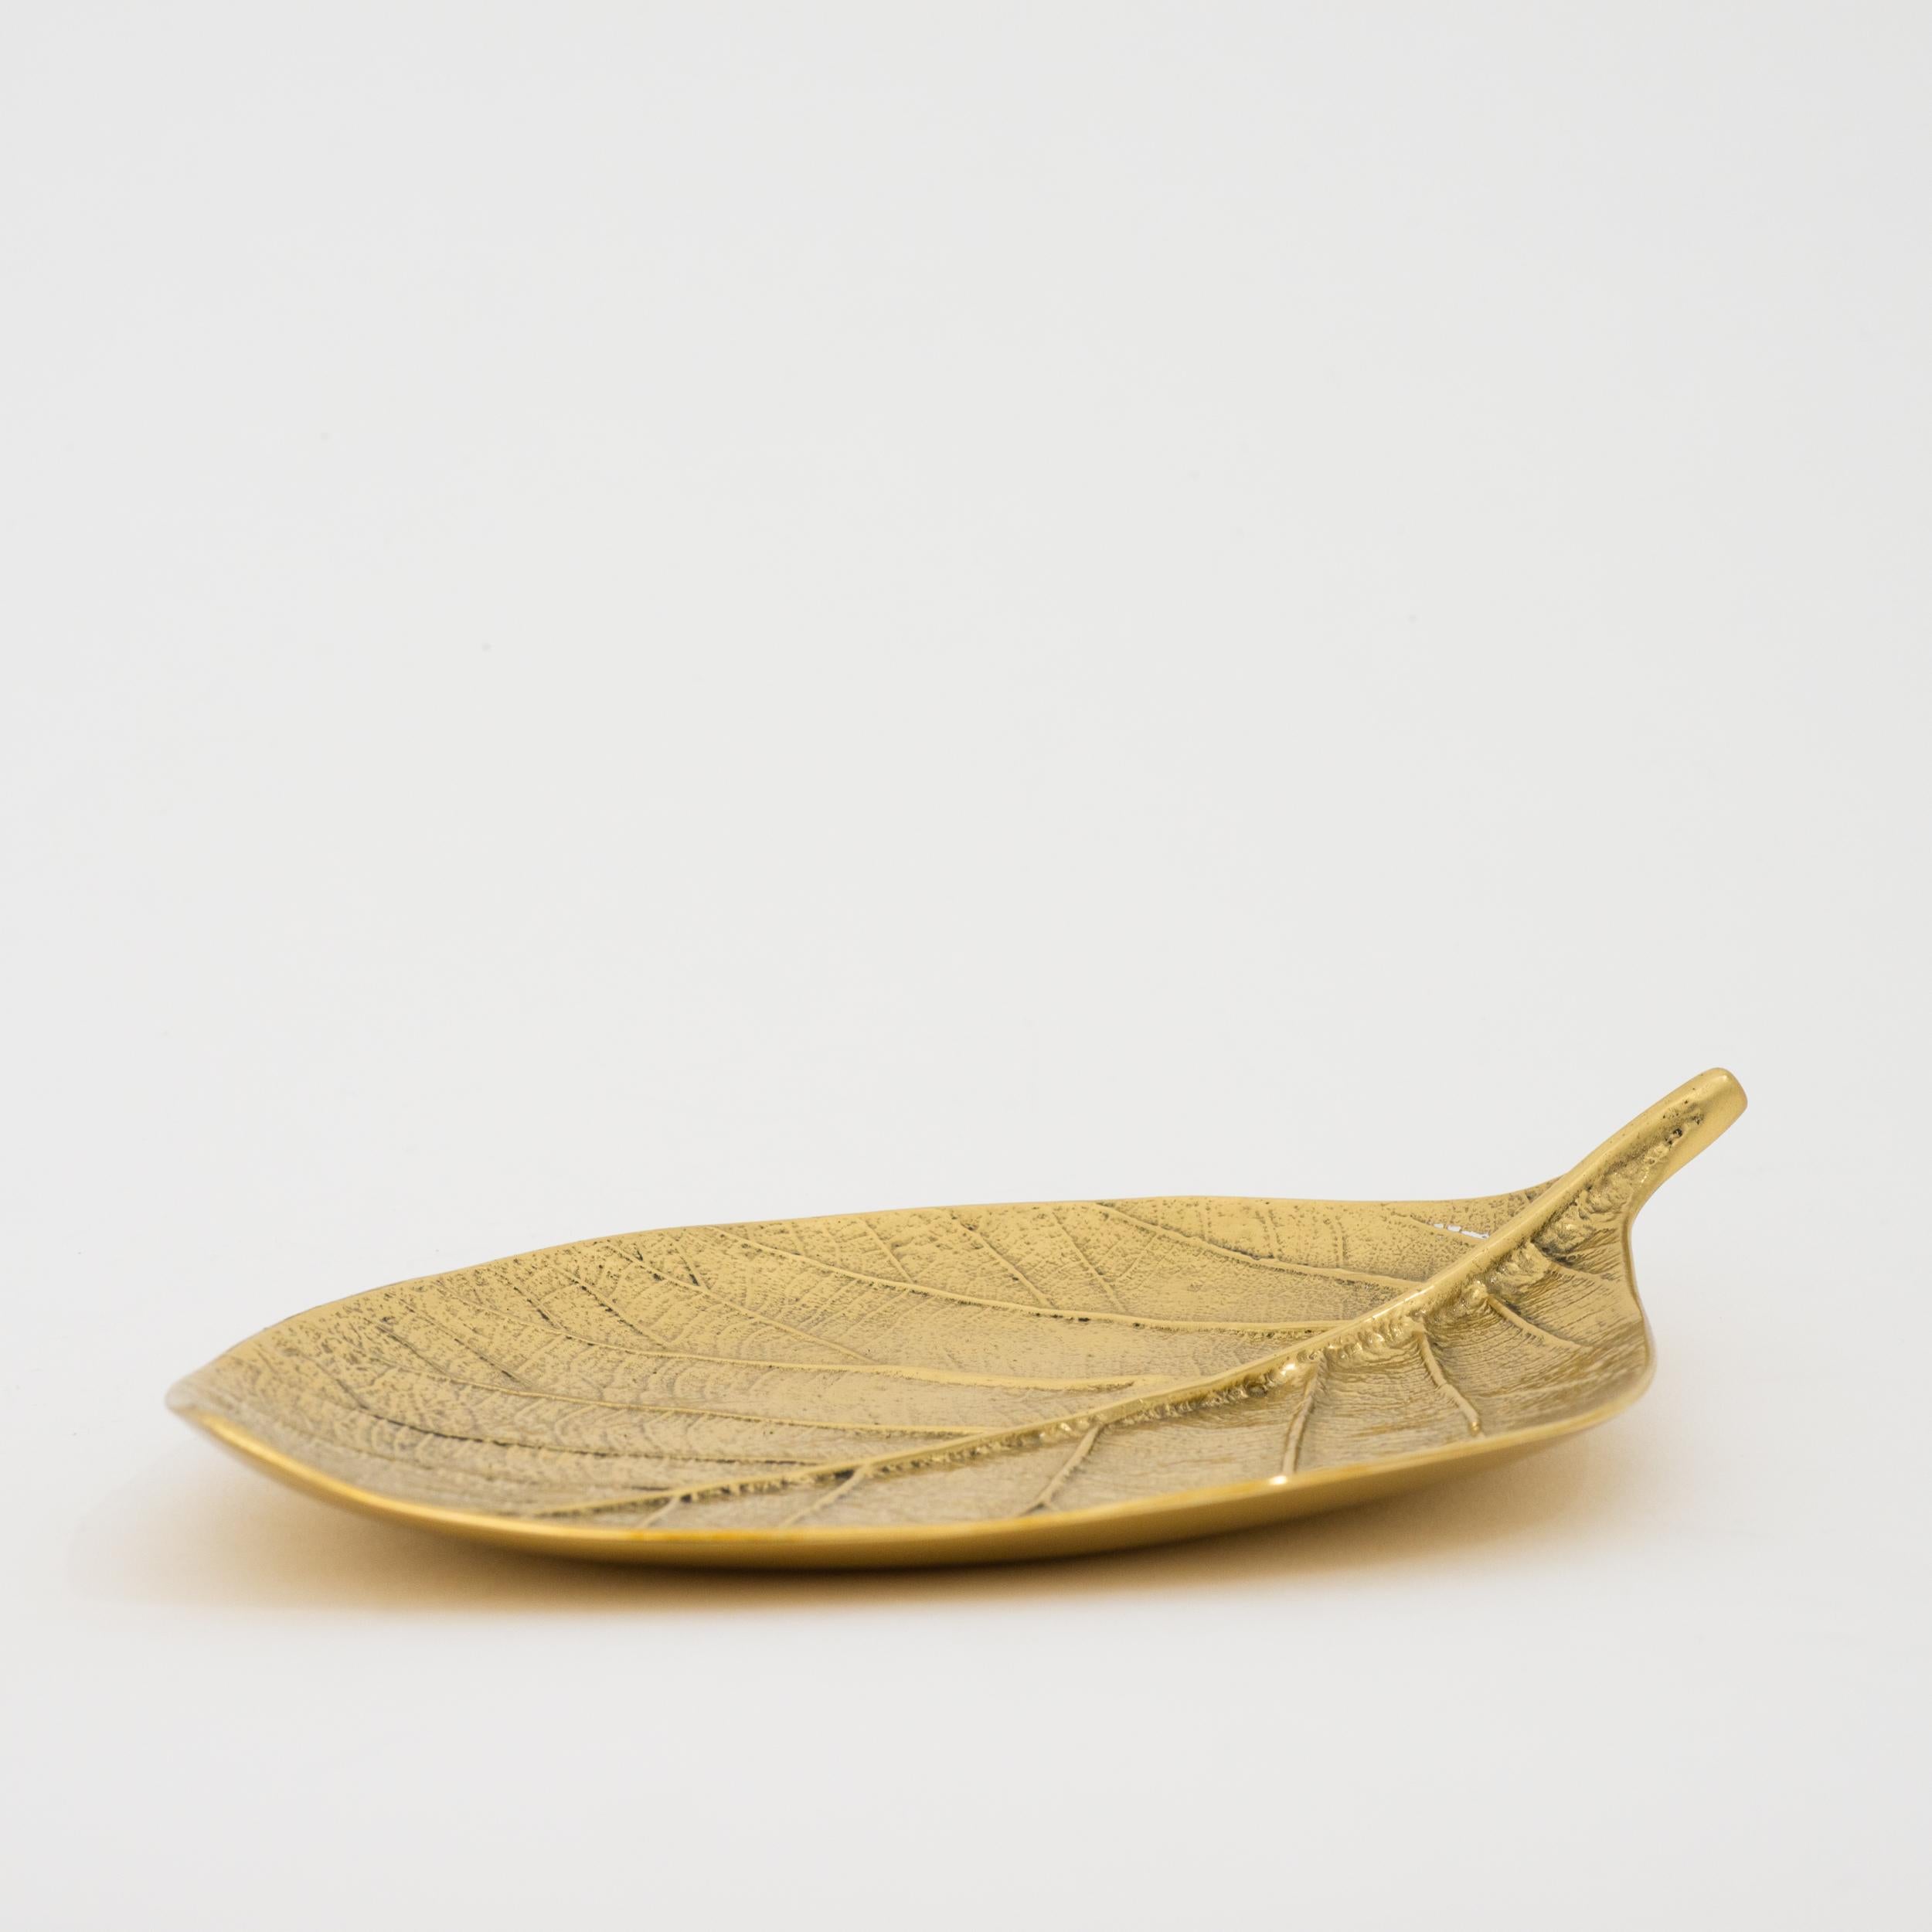 Decorative Handmade Cast Brass Leaf Vide Poche Candleholder, Medium For Sale 2